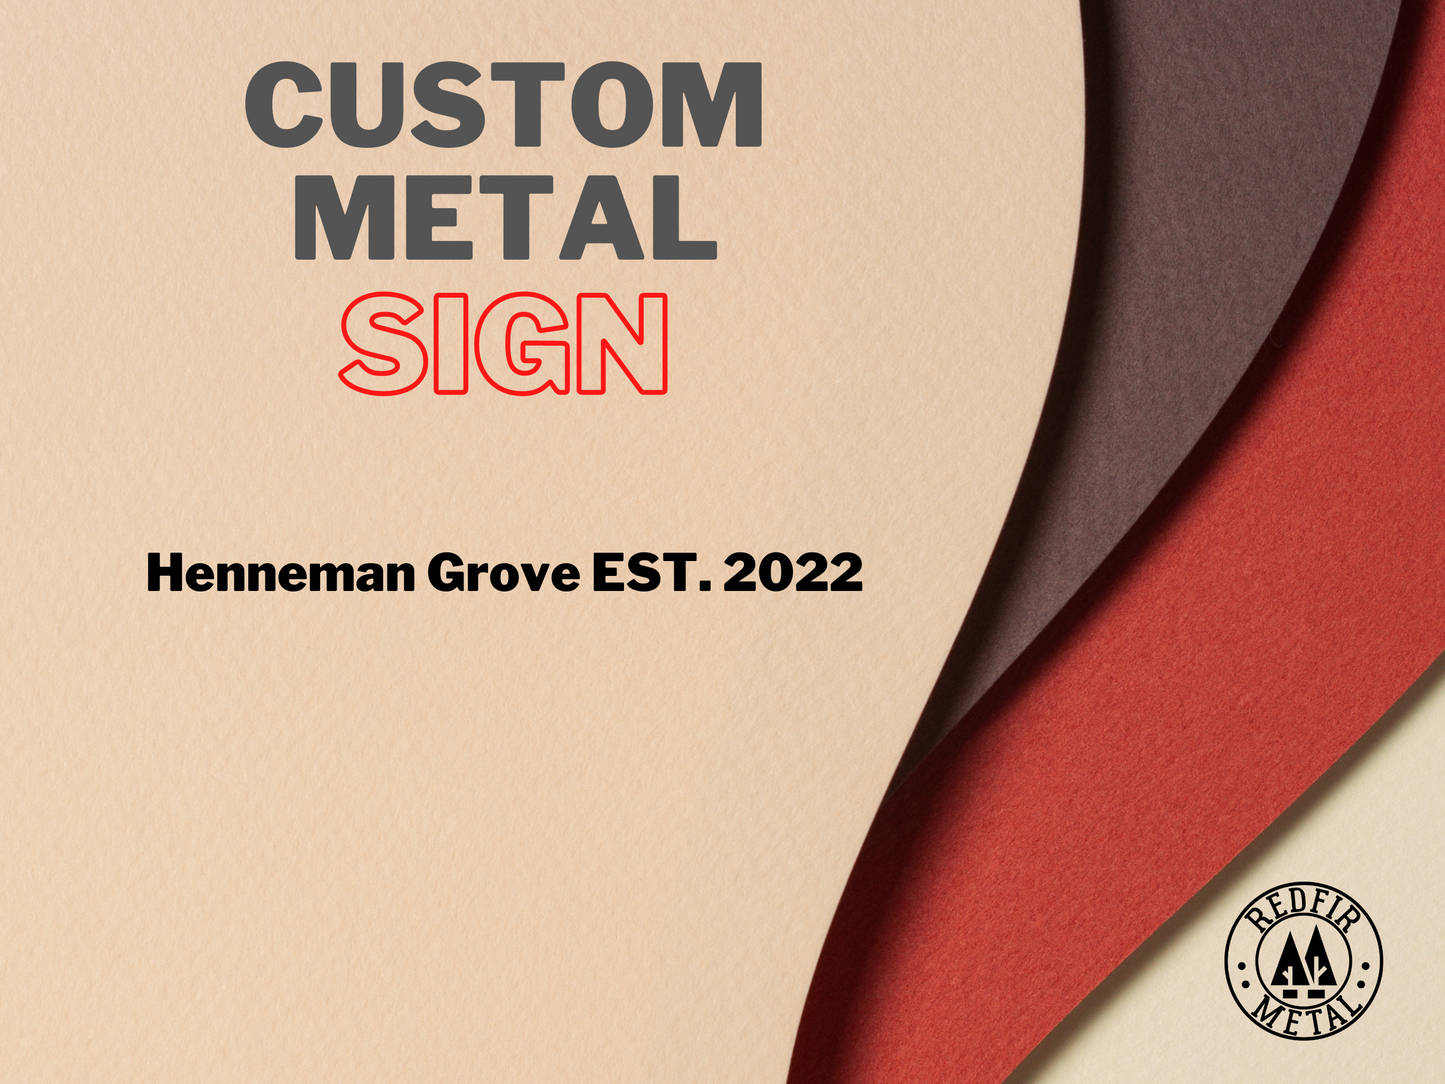 Custom Metal Sign, Henneman Grove